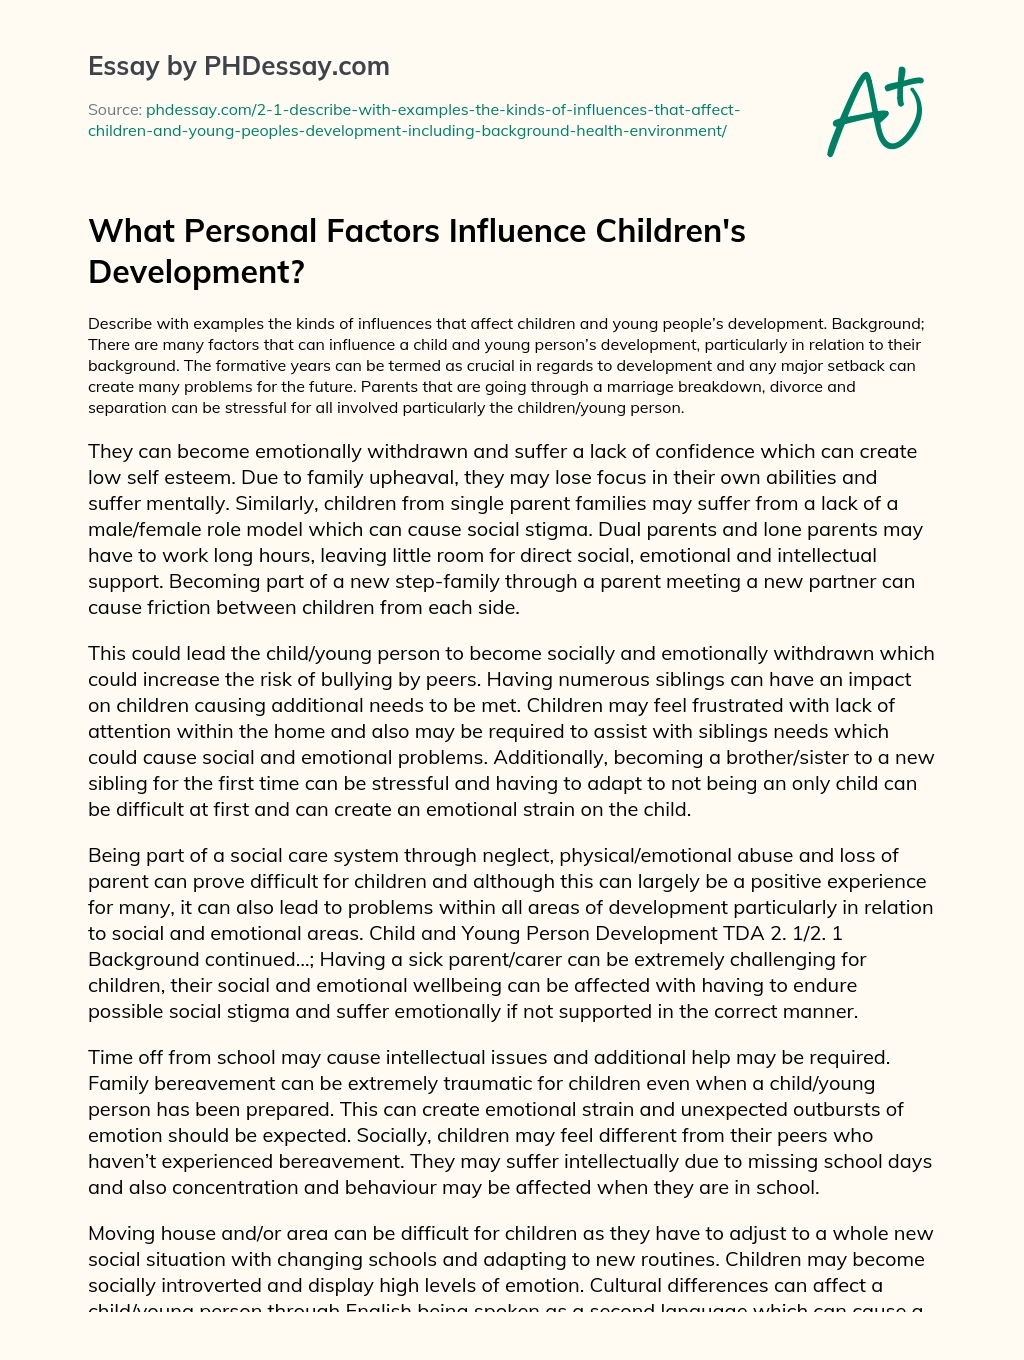 What Personal Factors Influence Children’s Development? essay